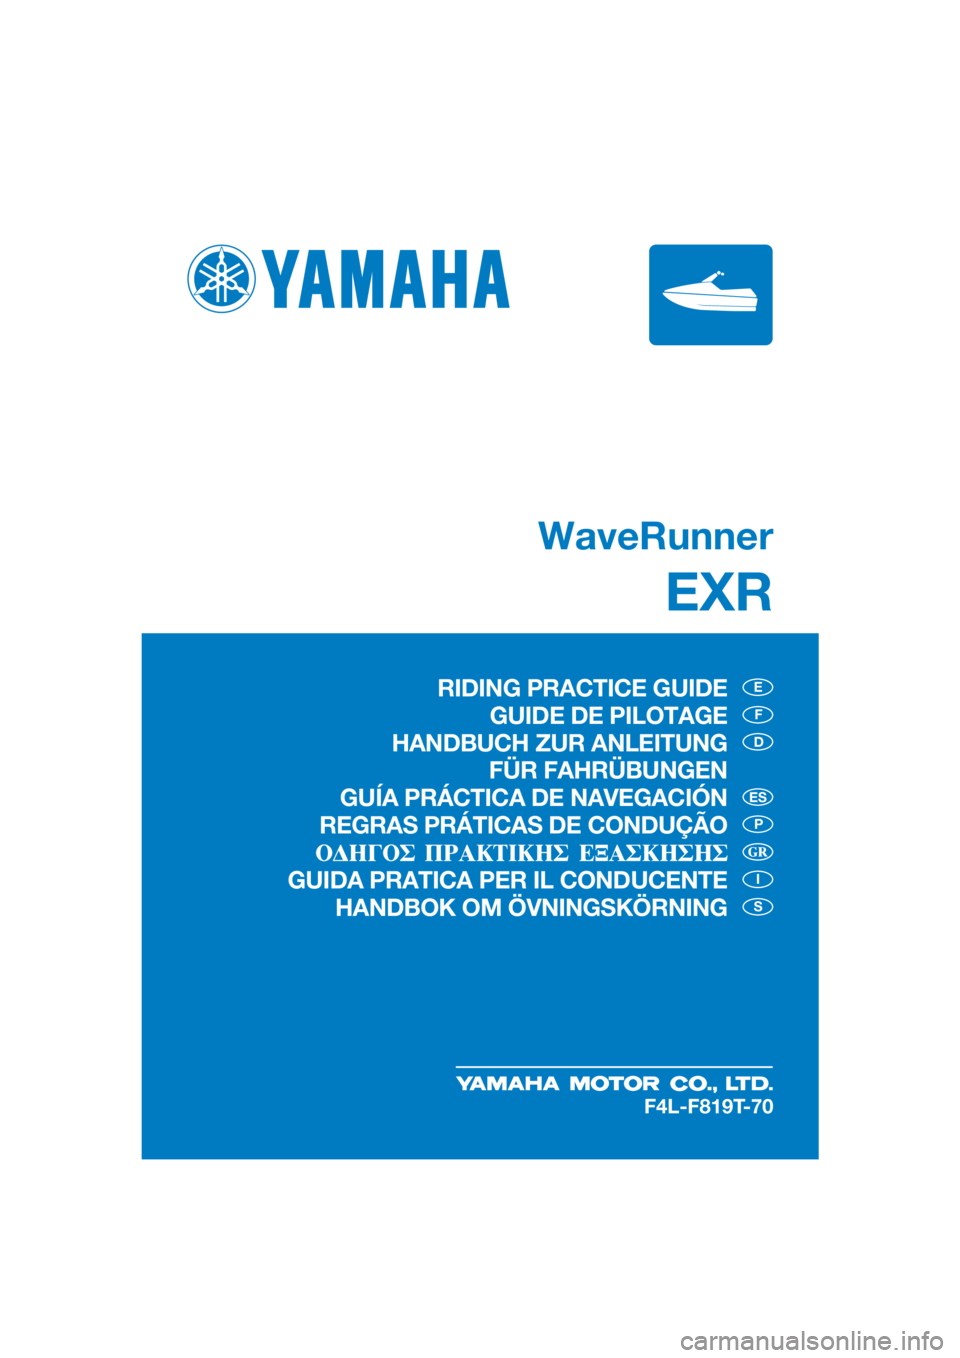 YAMAHA EXR 2019  Manuale de Empleo (in Spanish) 